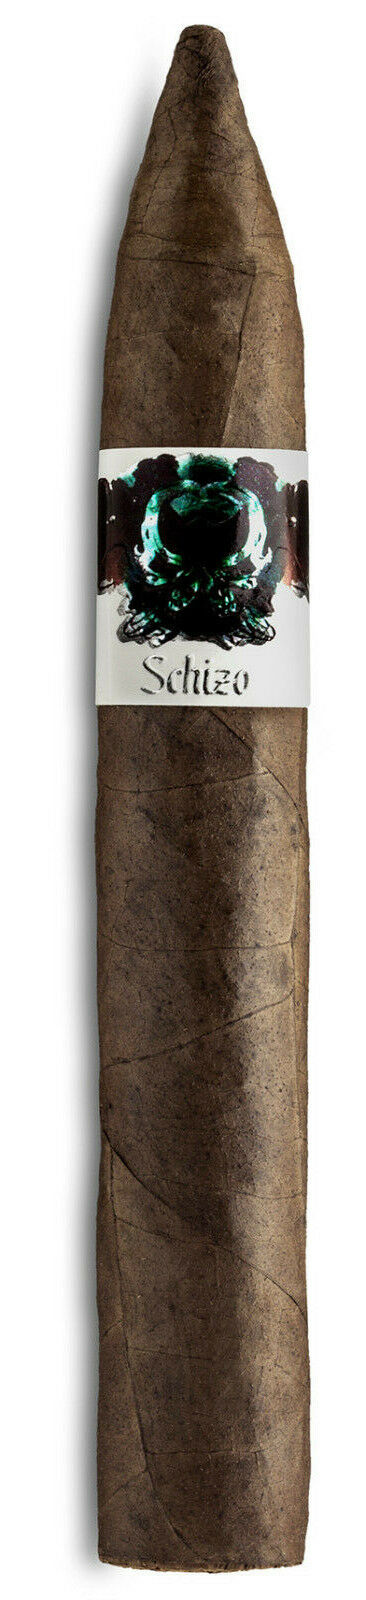 Asylum SCHIZO - Zigarren -  Torpedo 6x52 - Nicaragua - wahlweise 5 oder 20 Stück